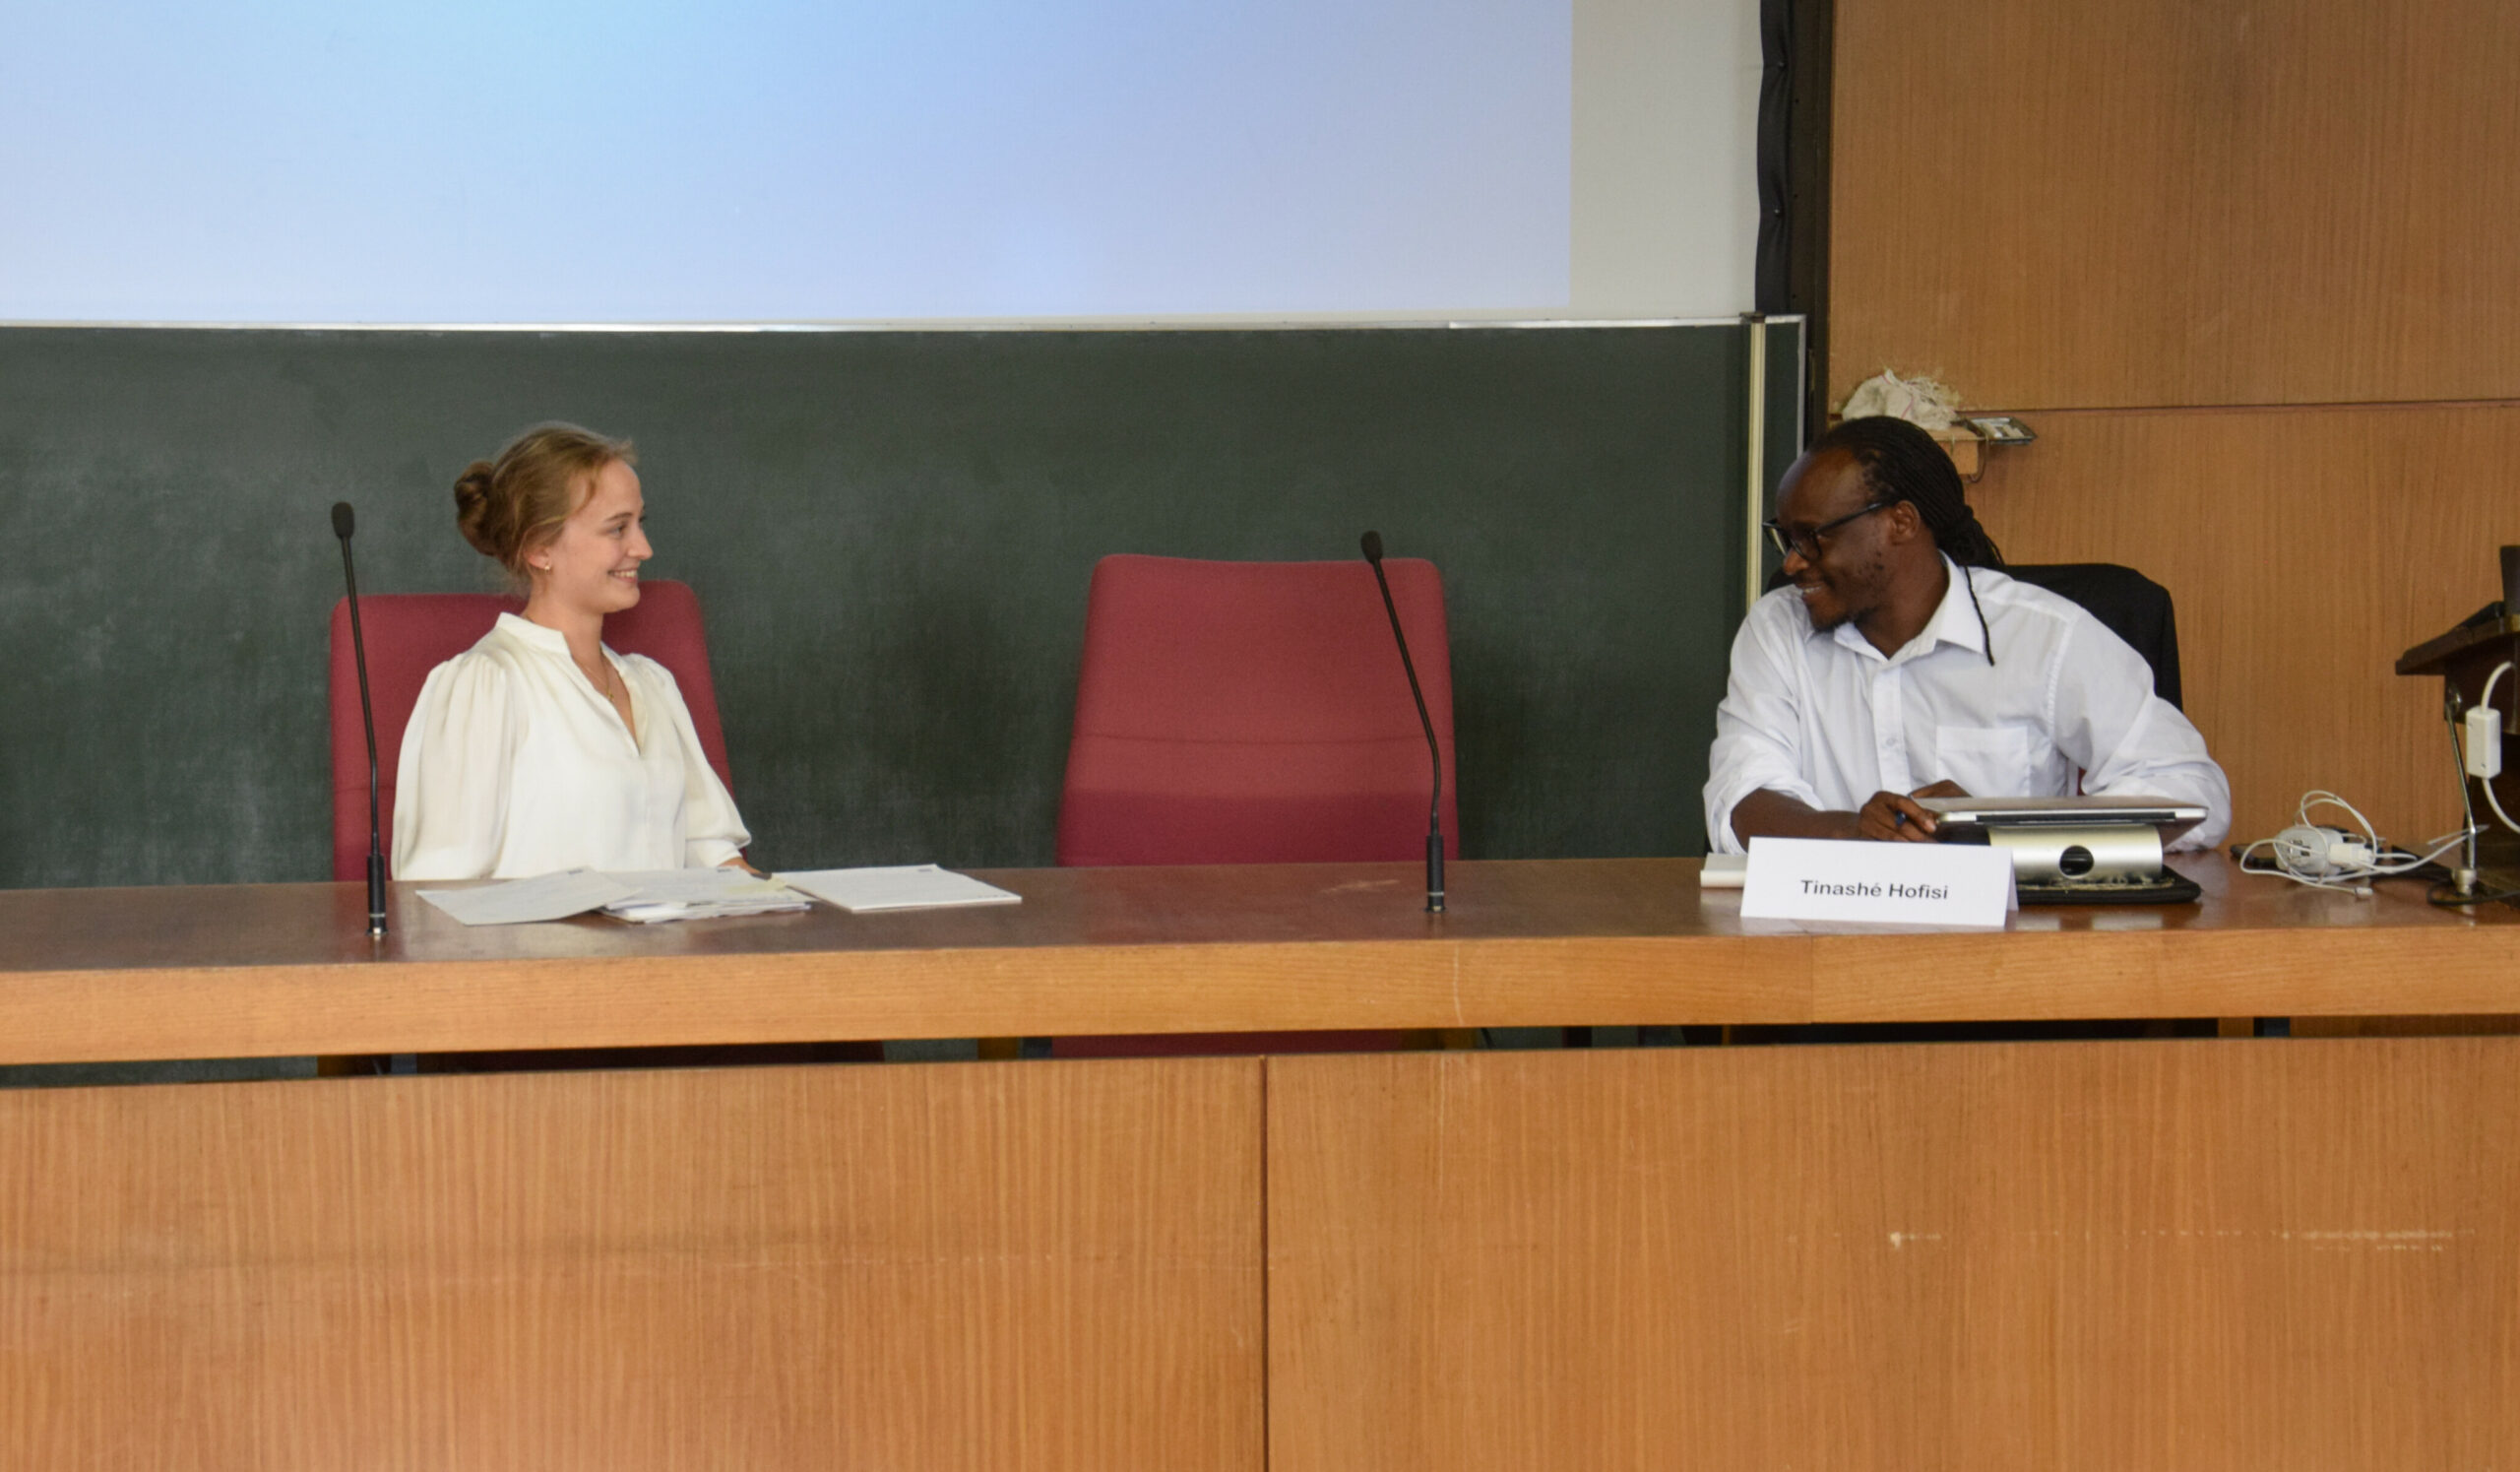 Picture of Tinashé Hofisi and moderator Katharina König during lecture.